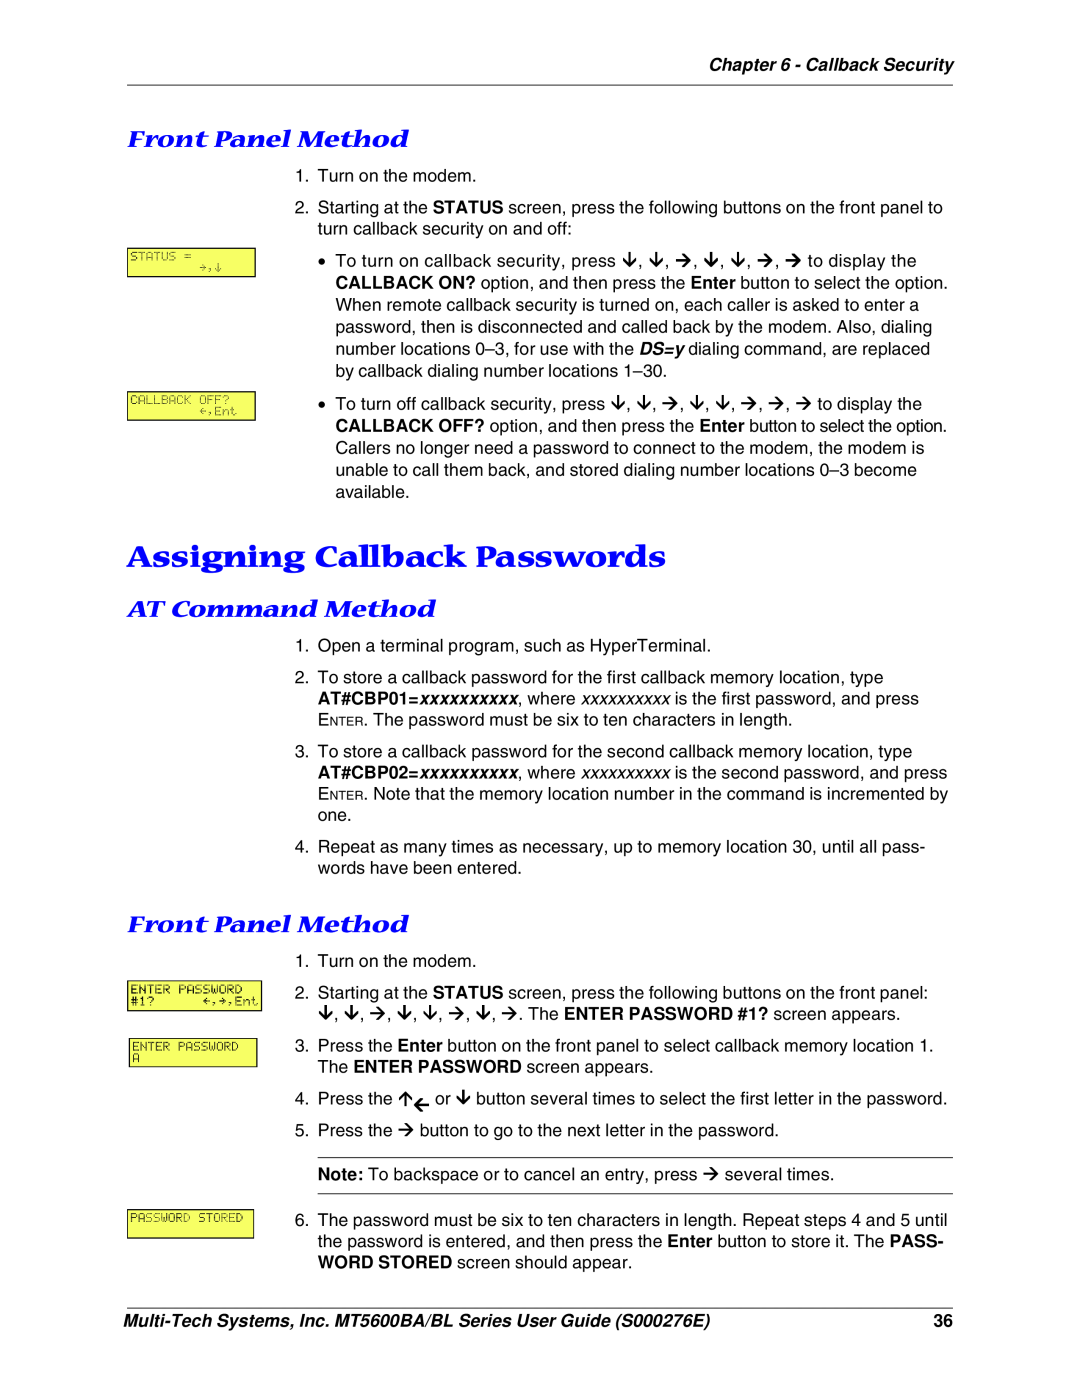 Multitech MT5600BL, MT5600BA manual Assigning Callback Passwords, Front Panel Method, AT Command Method 